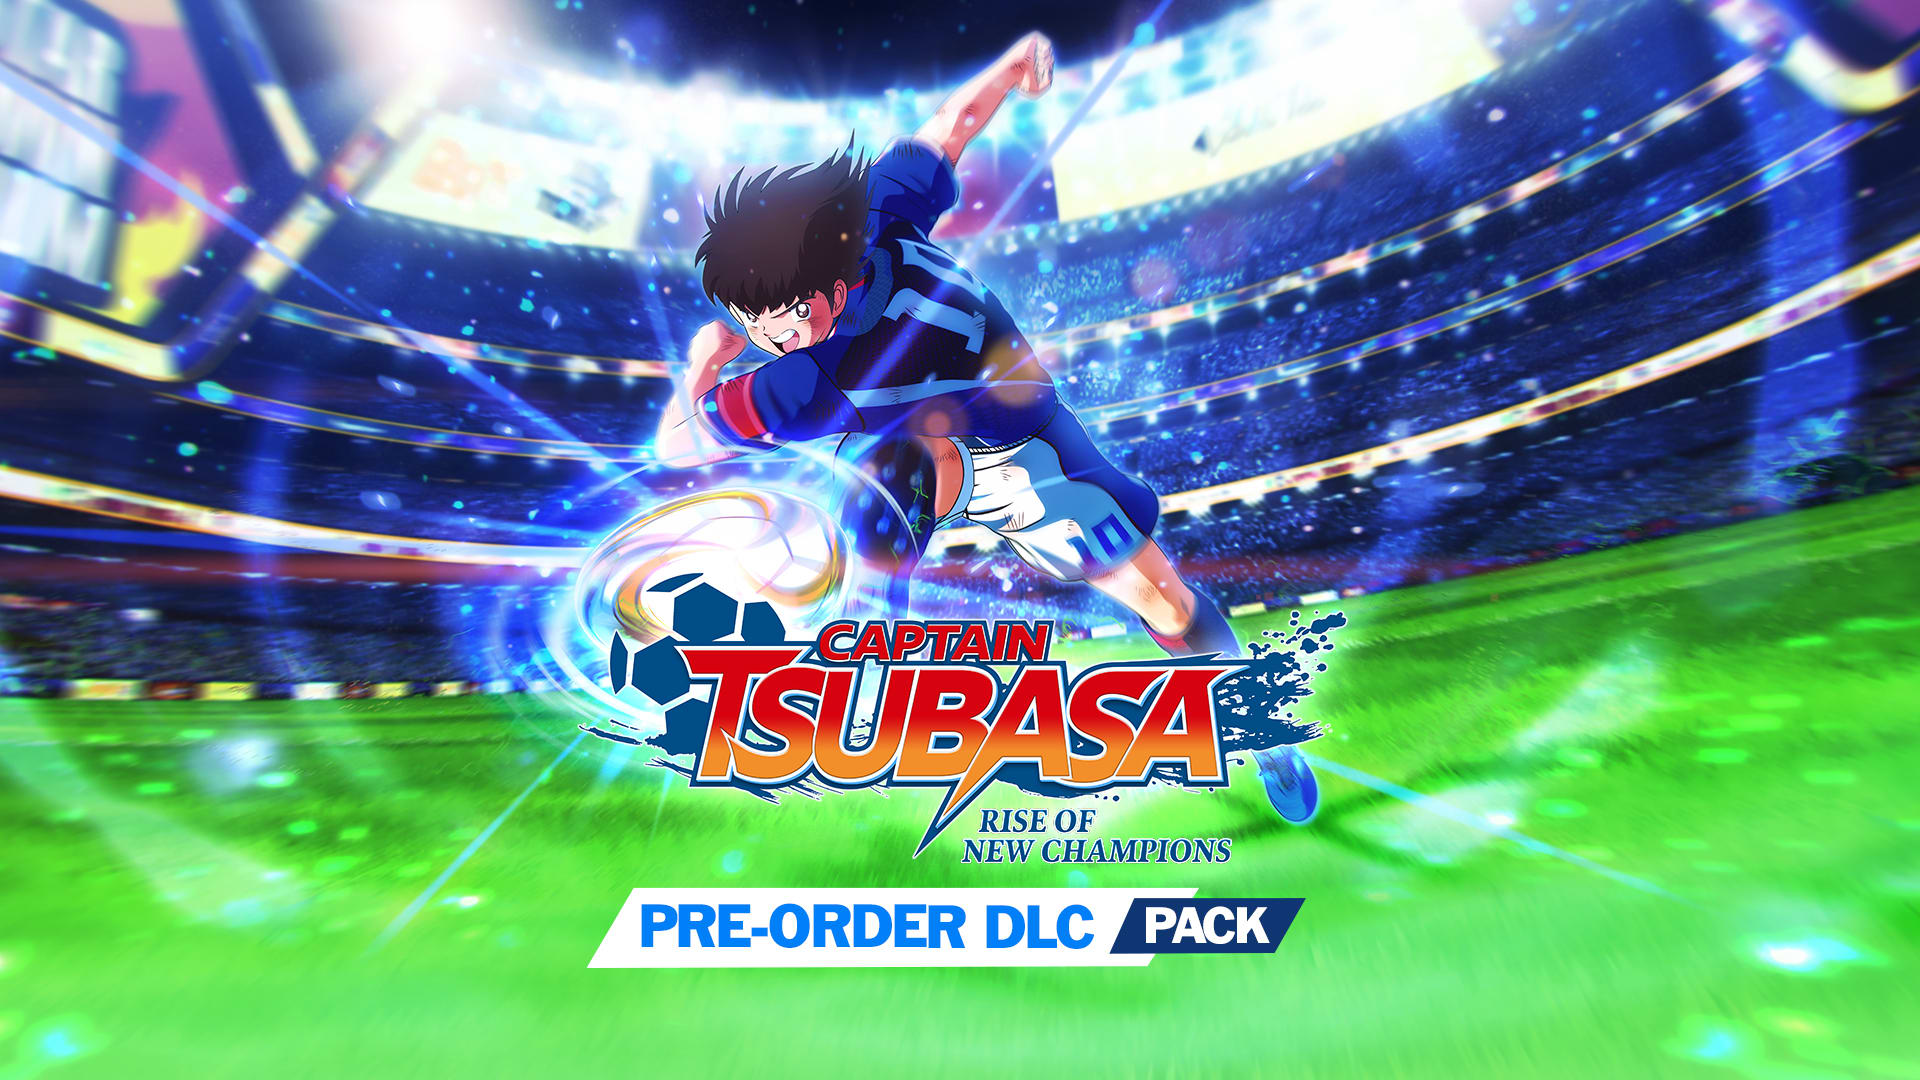 Captain Tsubasa: Rise of New Champions Pre-Order DLC Pack